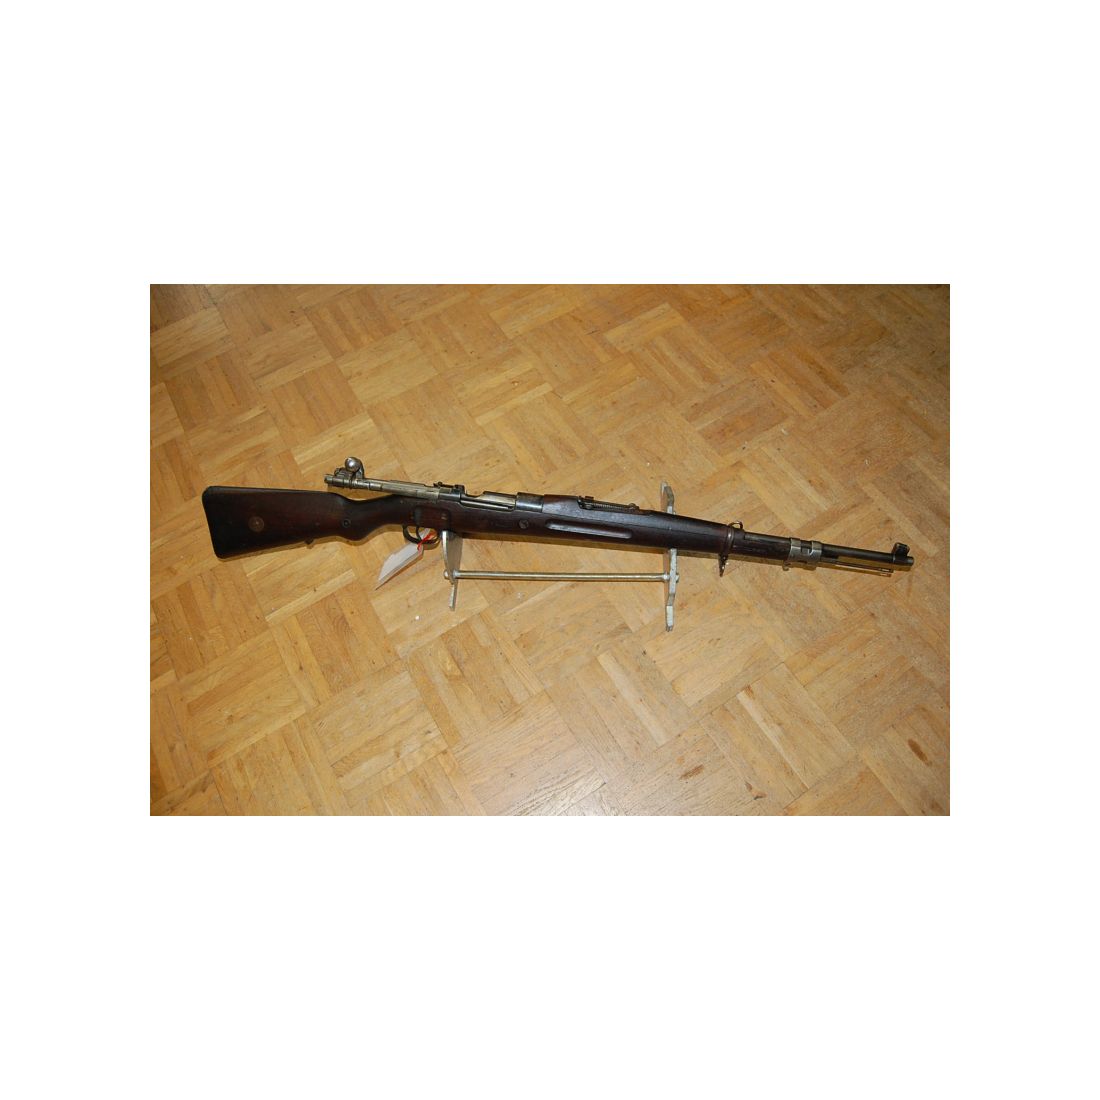 Rep. Büchse Brasilien Mauser M1908/43 Kal 7x57 Hersteller CZ Brno blanker Lauf +CIP